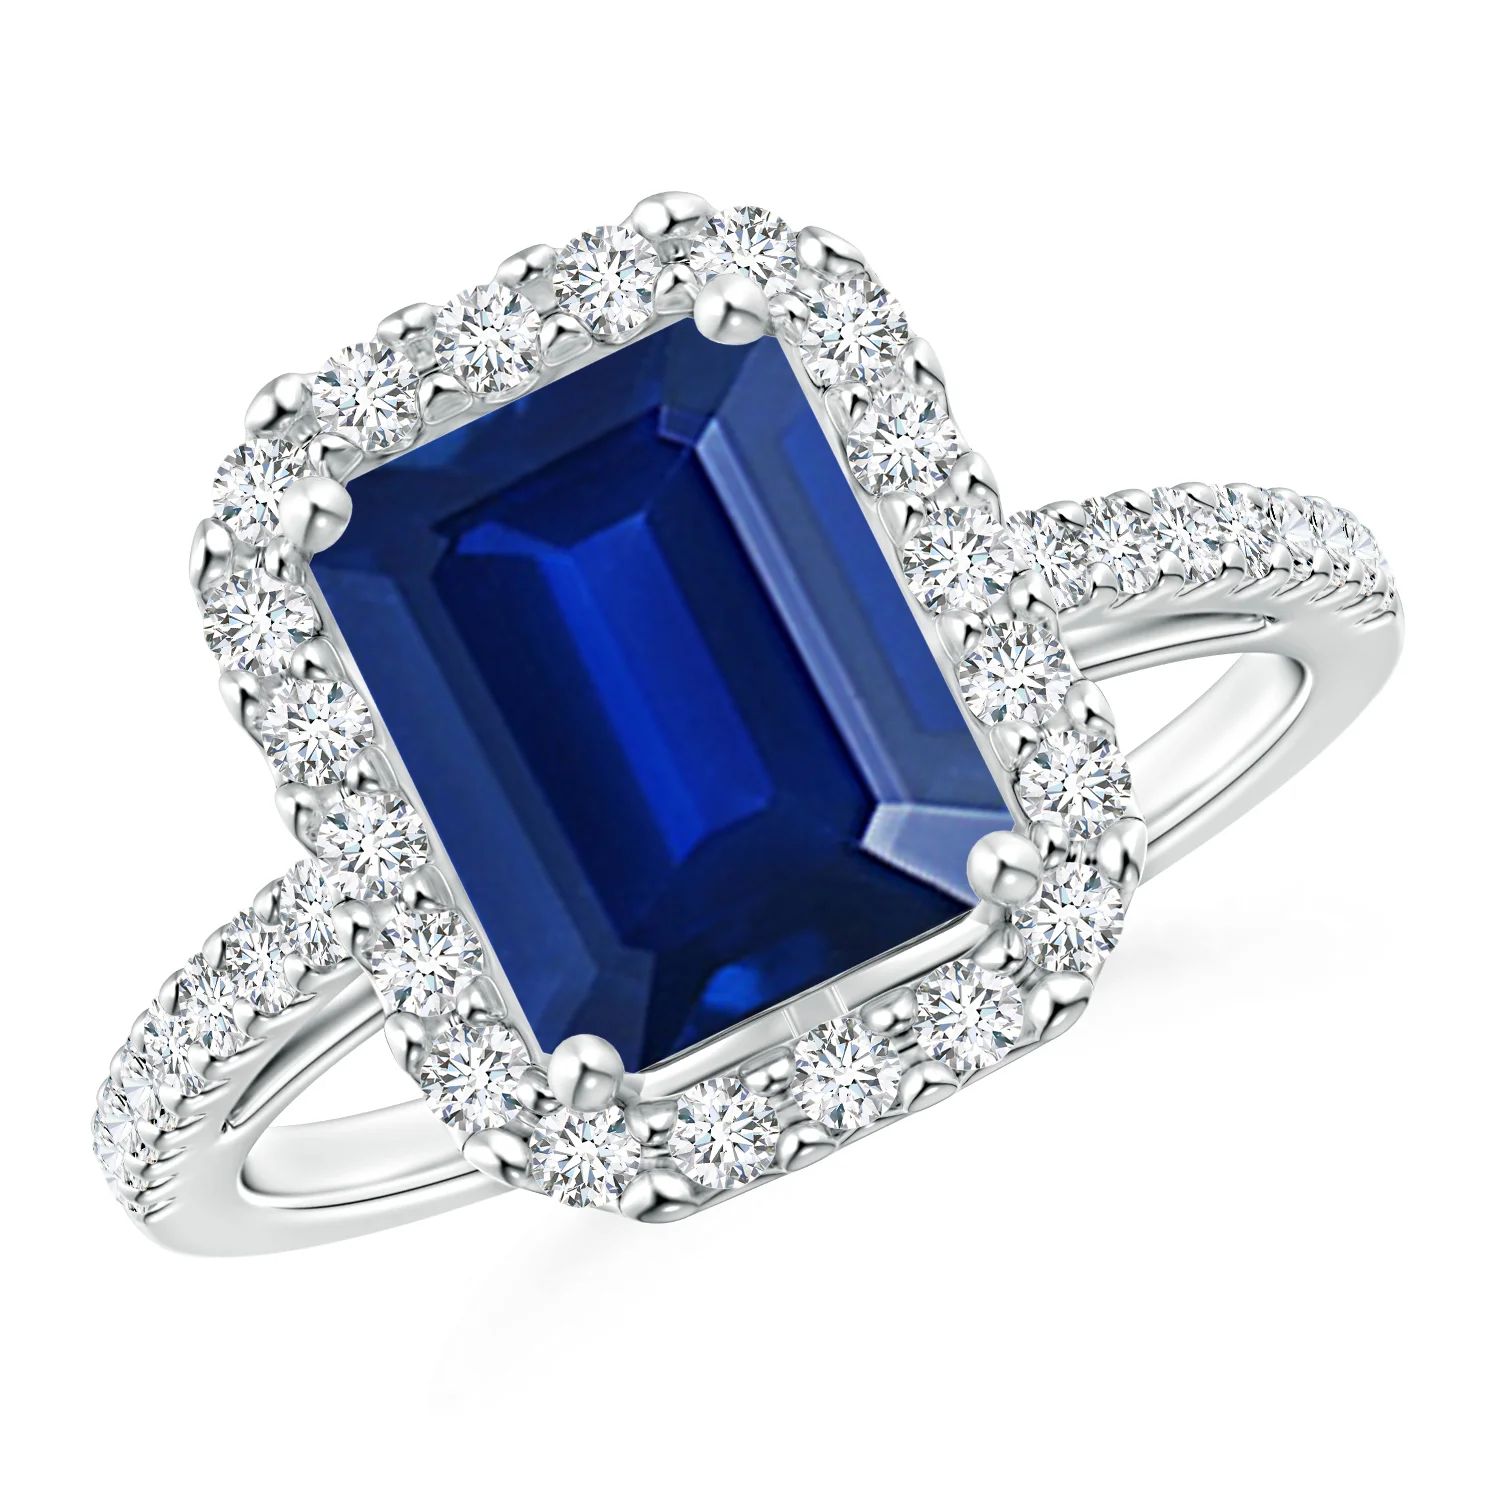 Vintage Inspired Emerald-Cut Sapphire Halo Ring | Angara | Angara